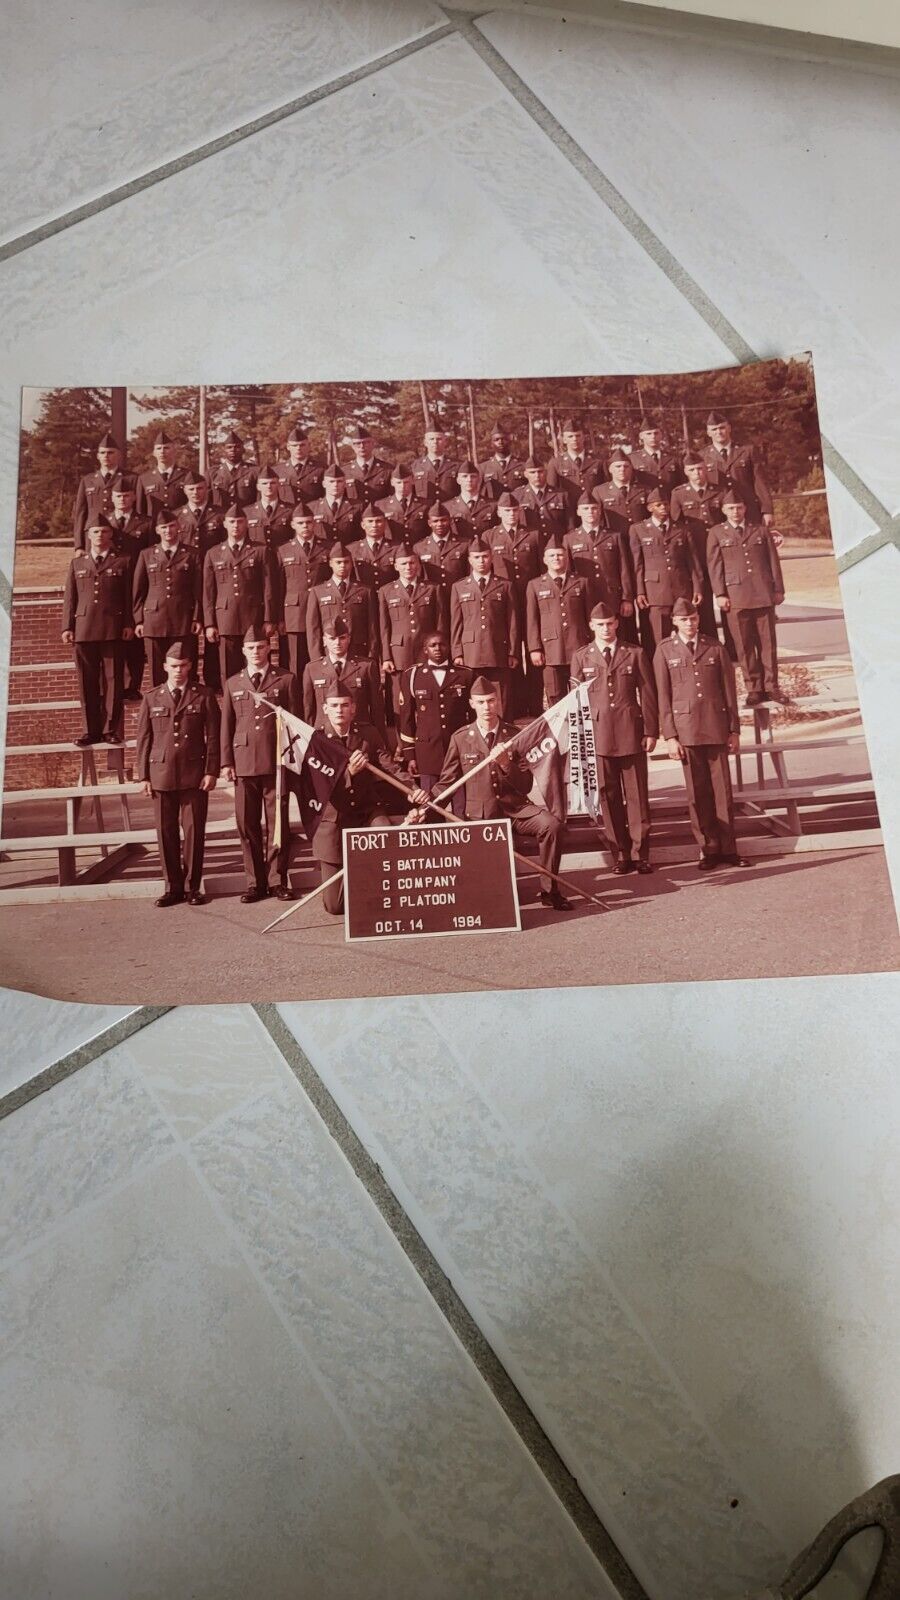 Vintage Picture 1984 Fort Benning Ga 5th Battalion C Company 2 Platoon Oct 14